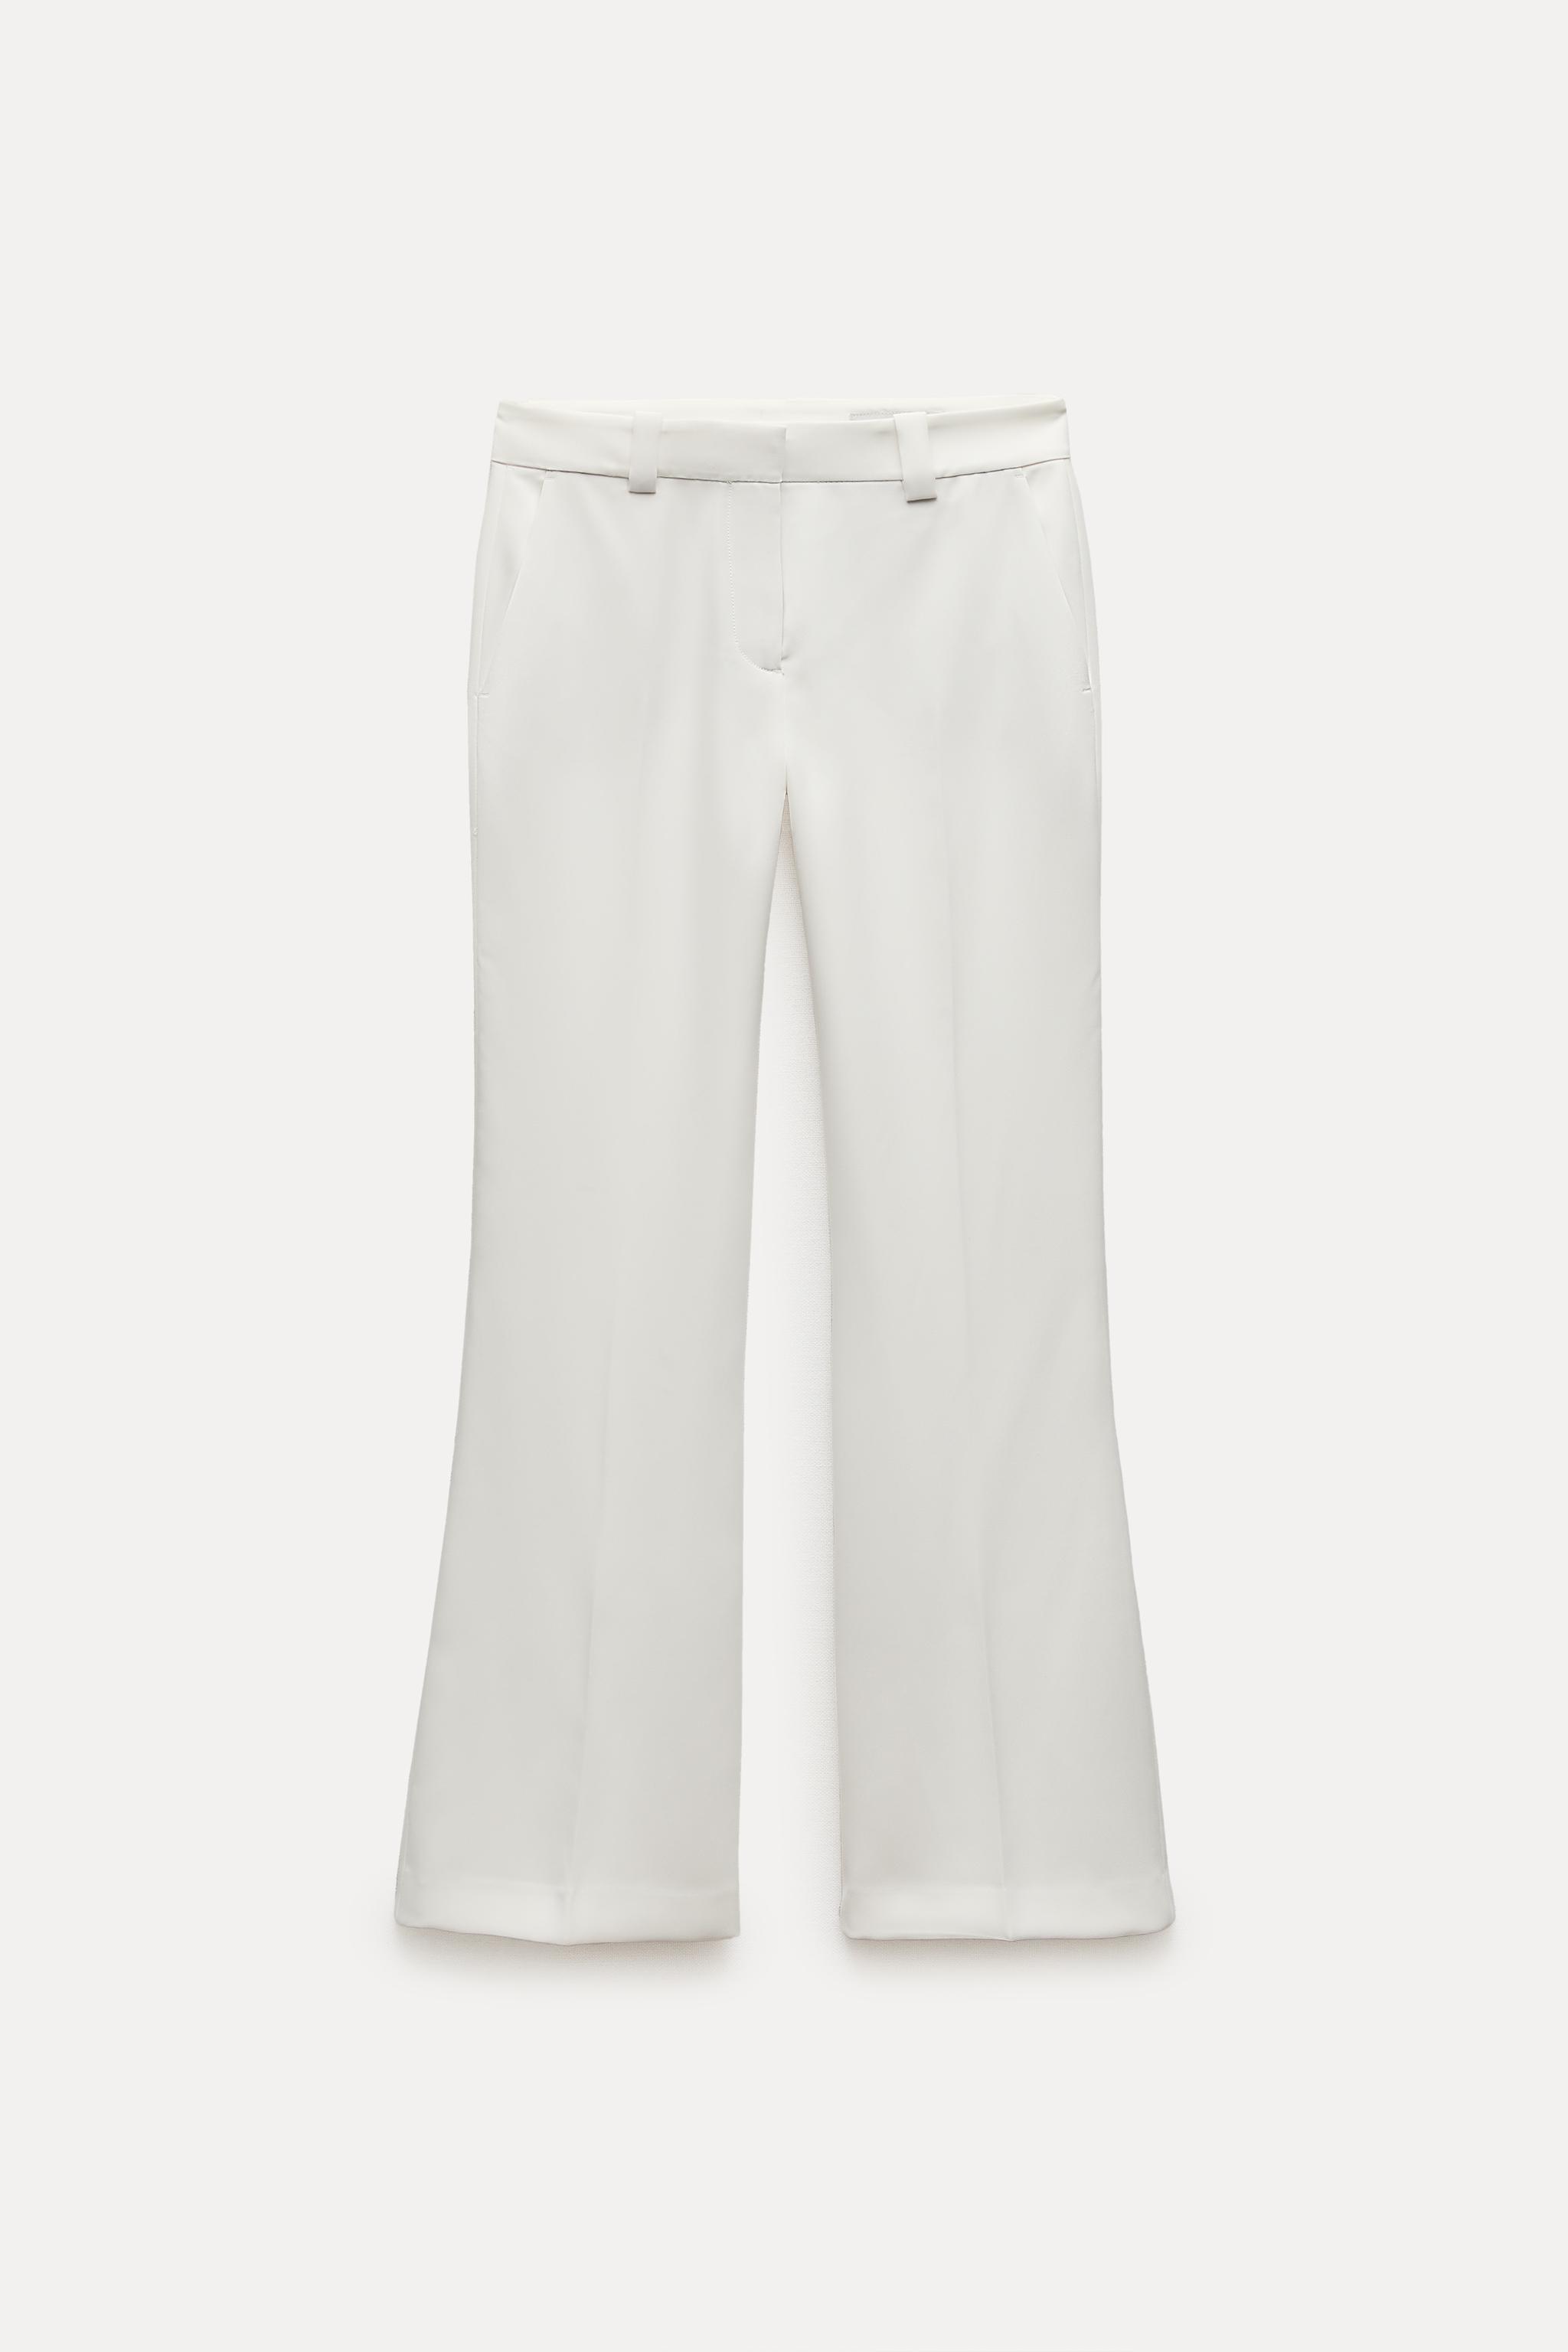 Zara Women Flared trousers 2359/703/704 (Large): Buy Online at Best Price  in UAE 